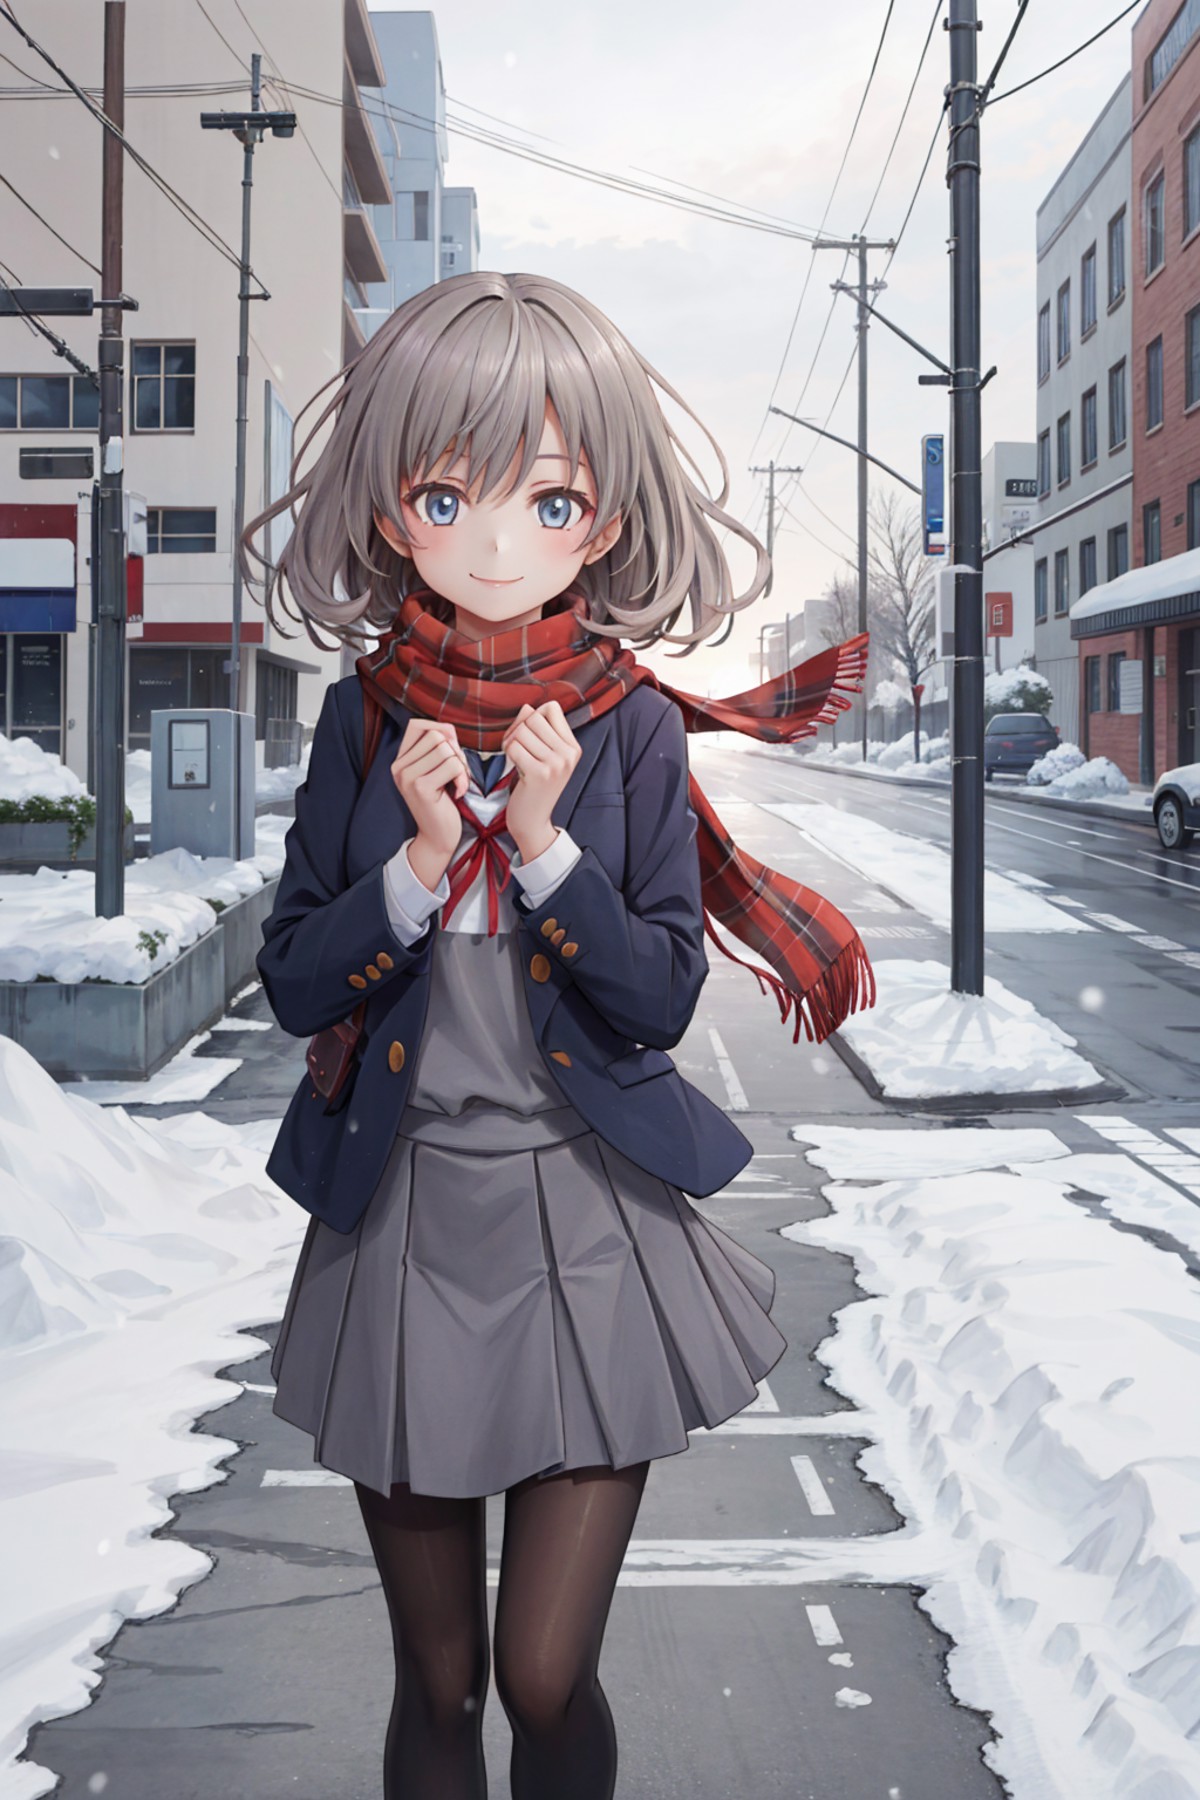 1girl, student,  running , smile, school uniform, scarf, snow, winter, windy,
street, urban
<lora:Keke:0.51>